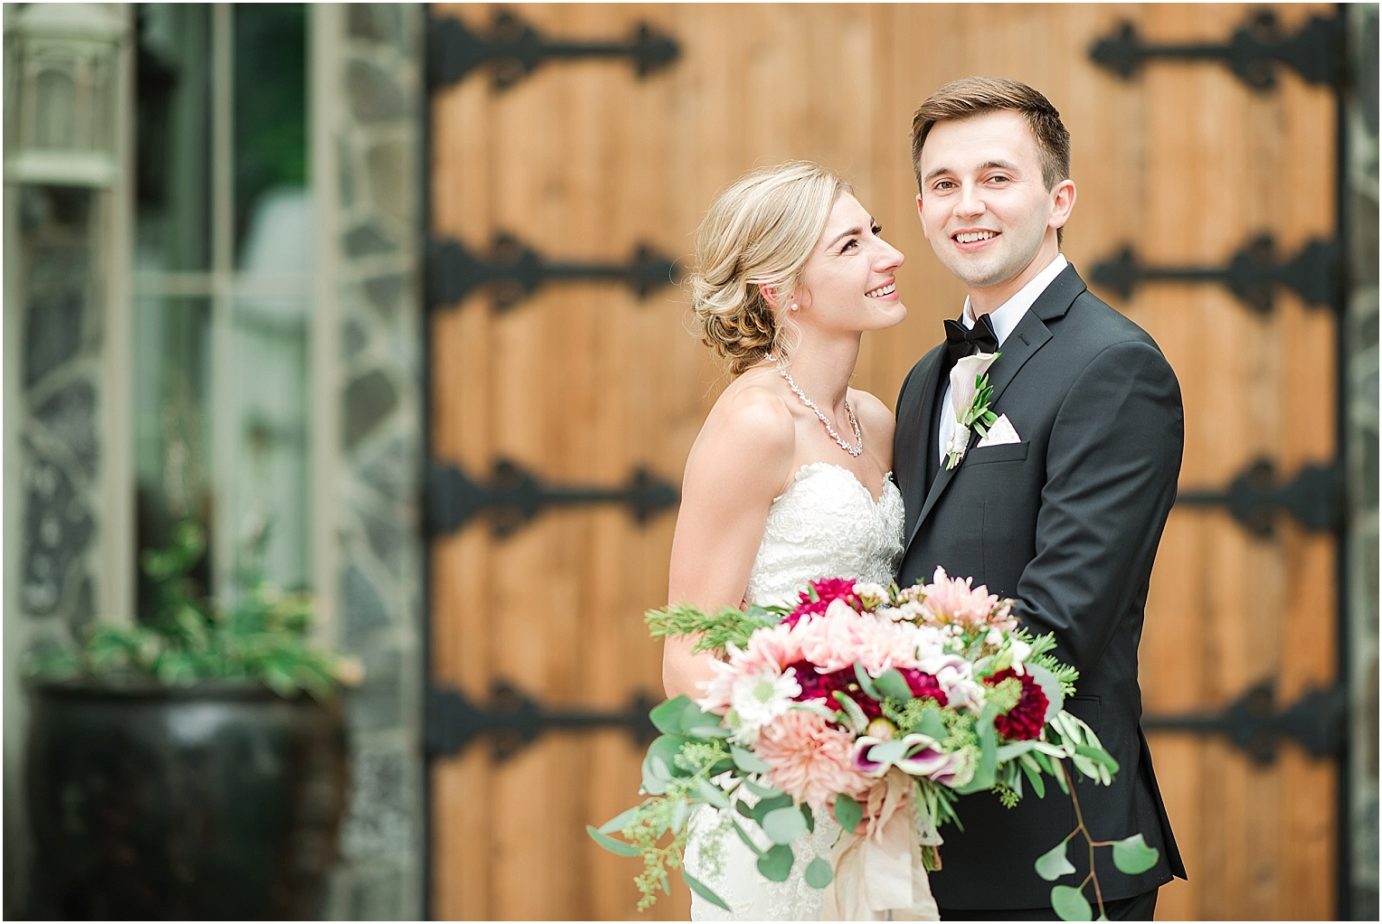 Terra Blanca Winery Wedding Benton City Photographer Armin and Kendall bride and groom by front door